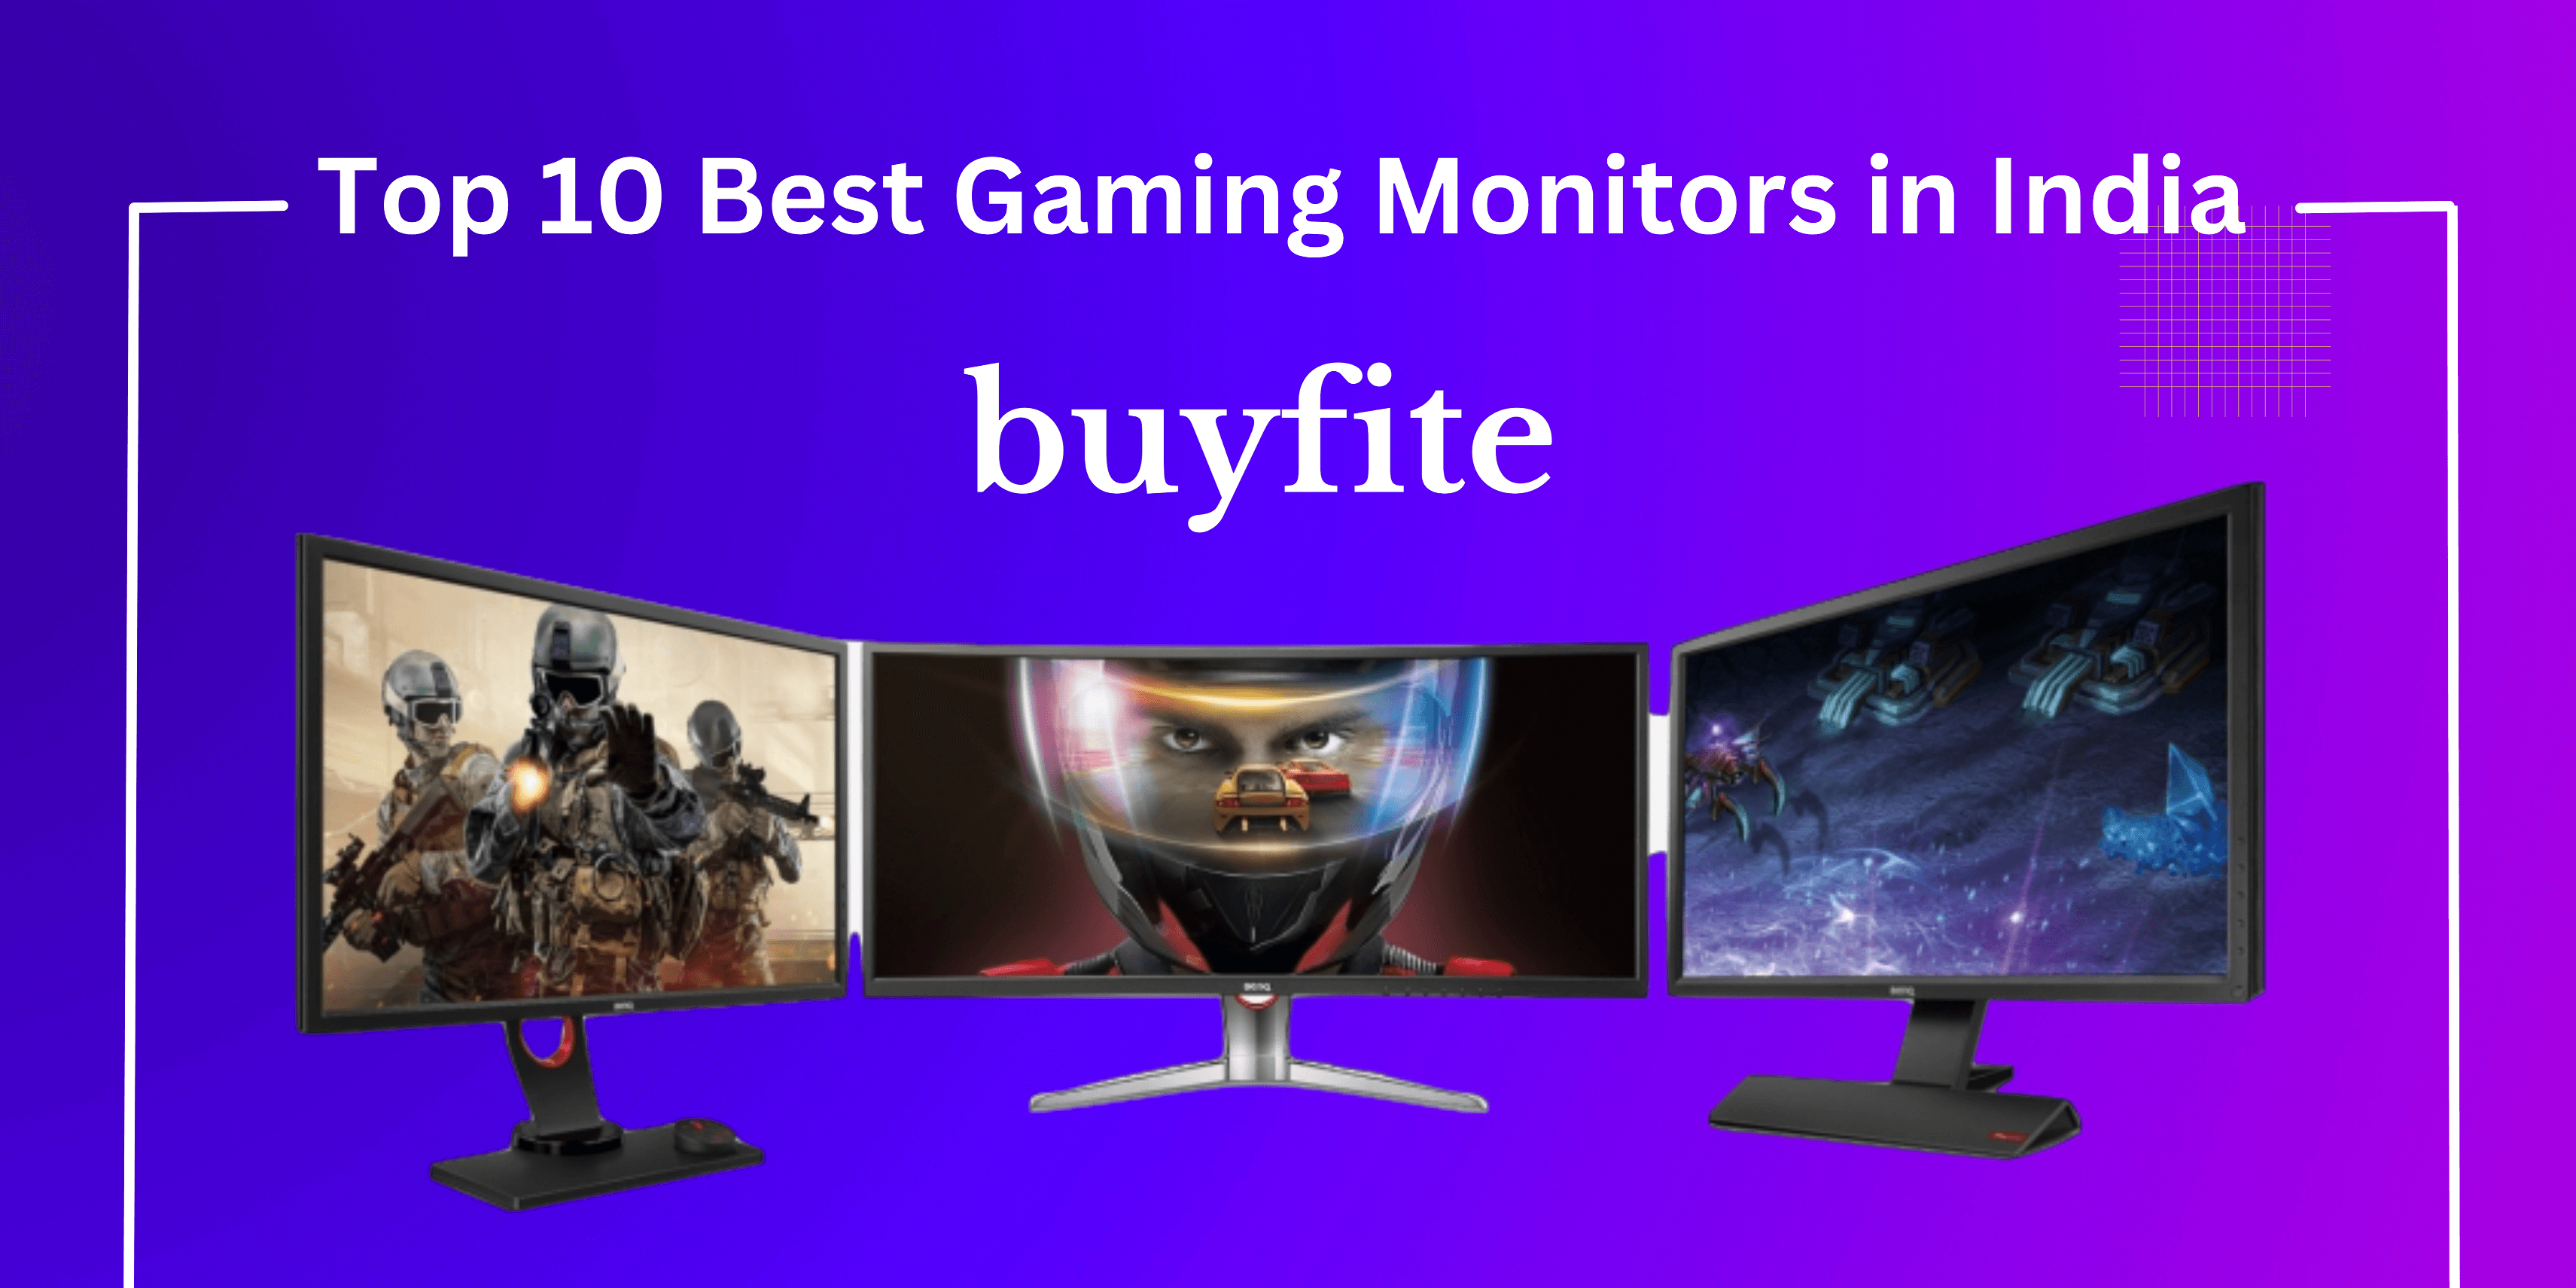 Top 10 Best Gaming Monitors in India - buyfite